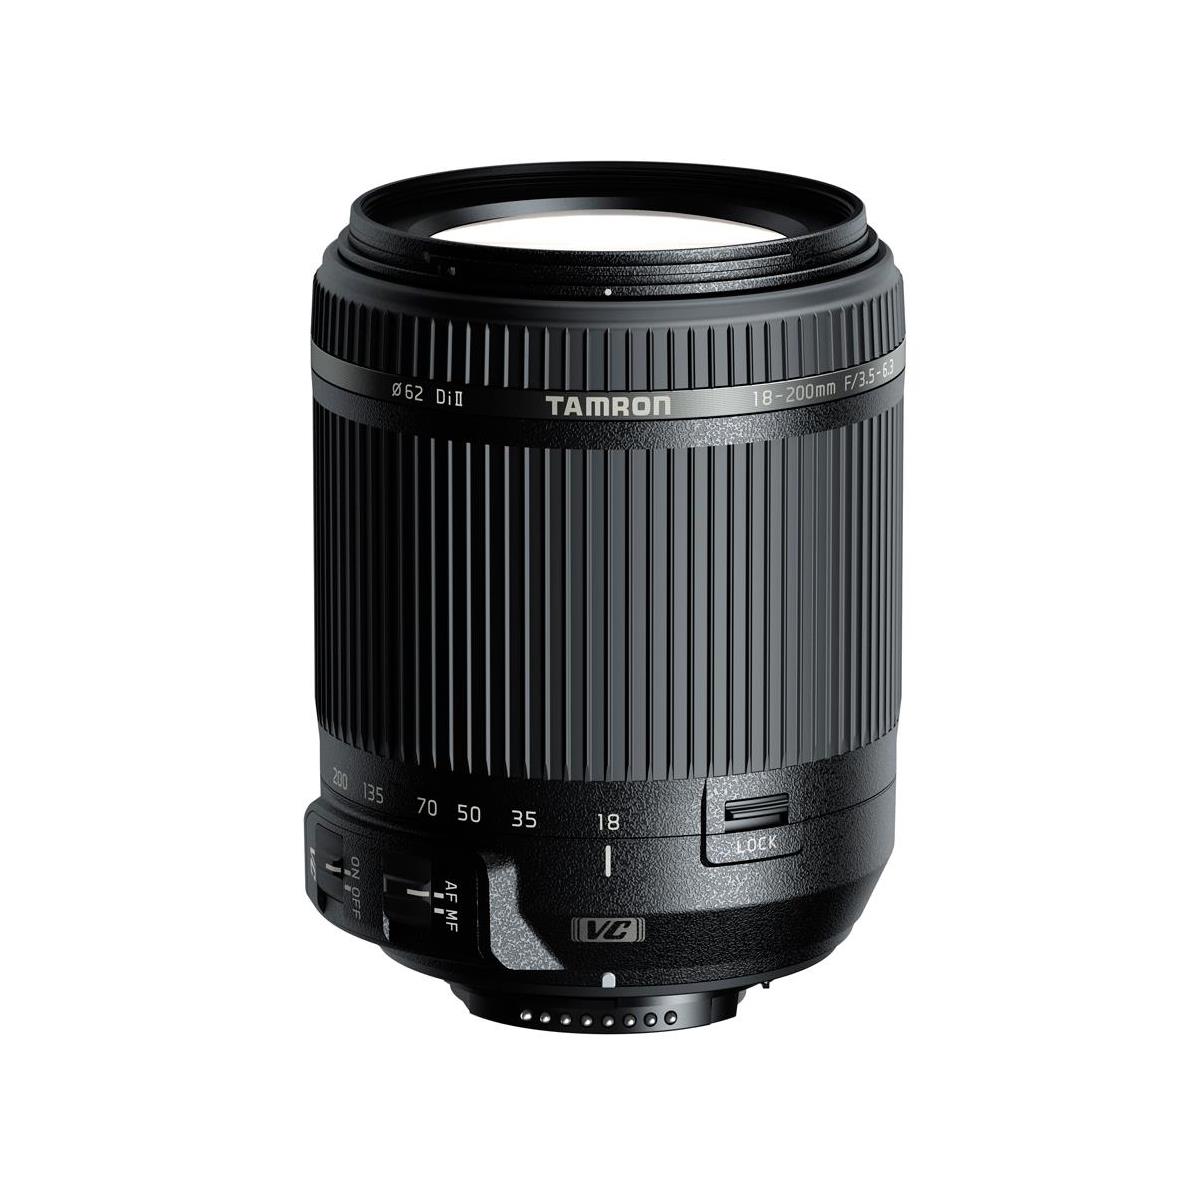 Tamron 18-200mm f/3.5-6.3 Di II VC AF Zoom Lens for Nikon F Mount